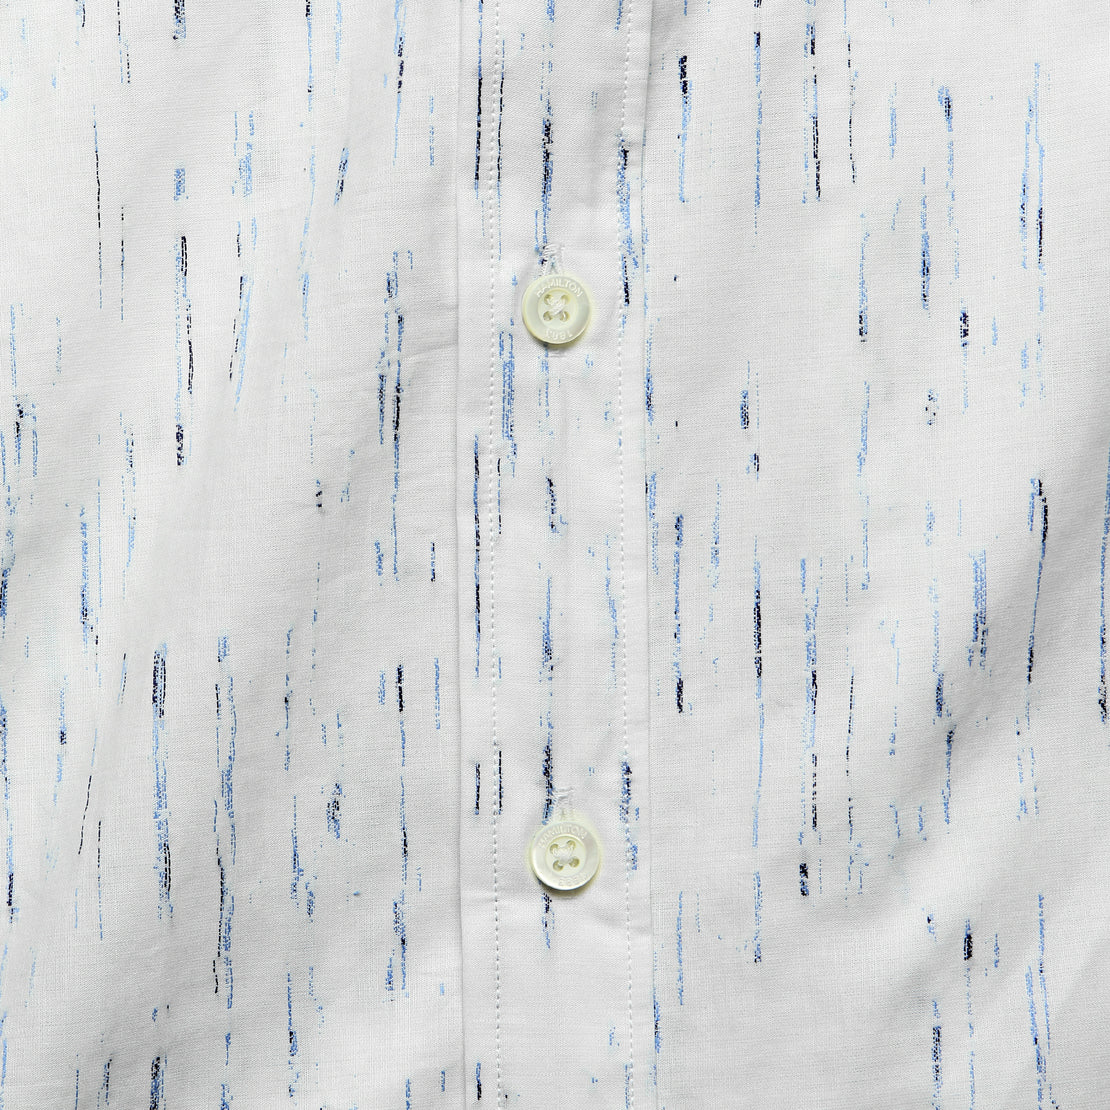 Hamilton - S/S Fleck Stripe Shirt, SS19 - Hamilton Shirt Co. - STAG Provisions - Tops - S/S Woven - Fleck